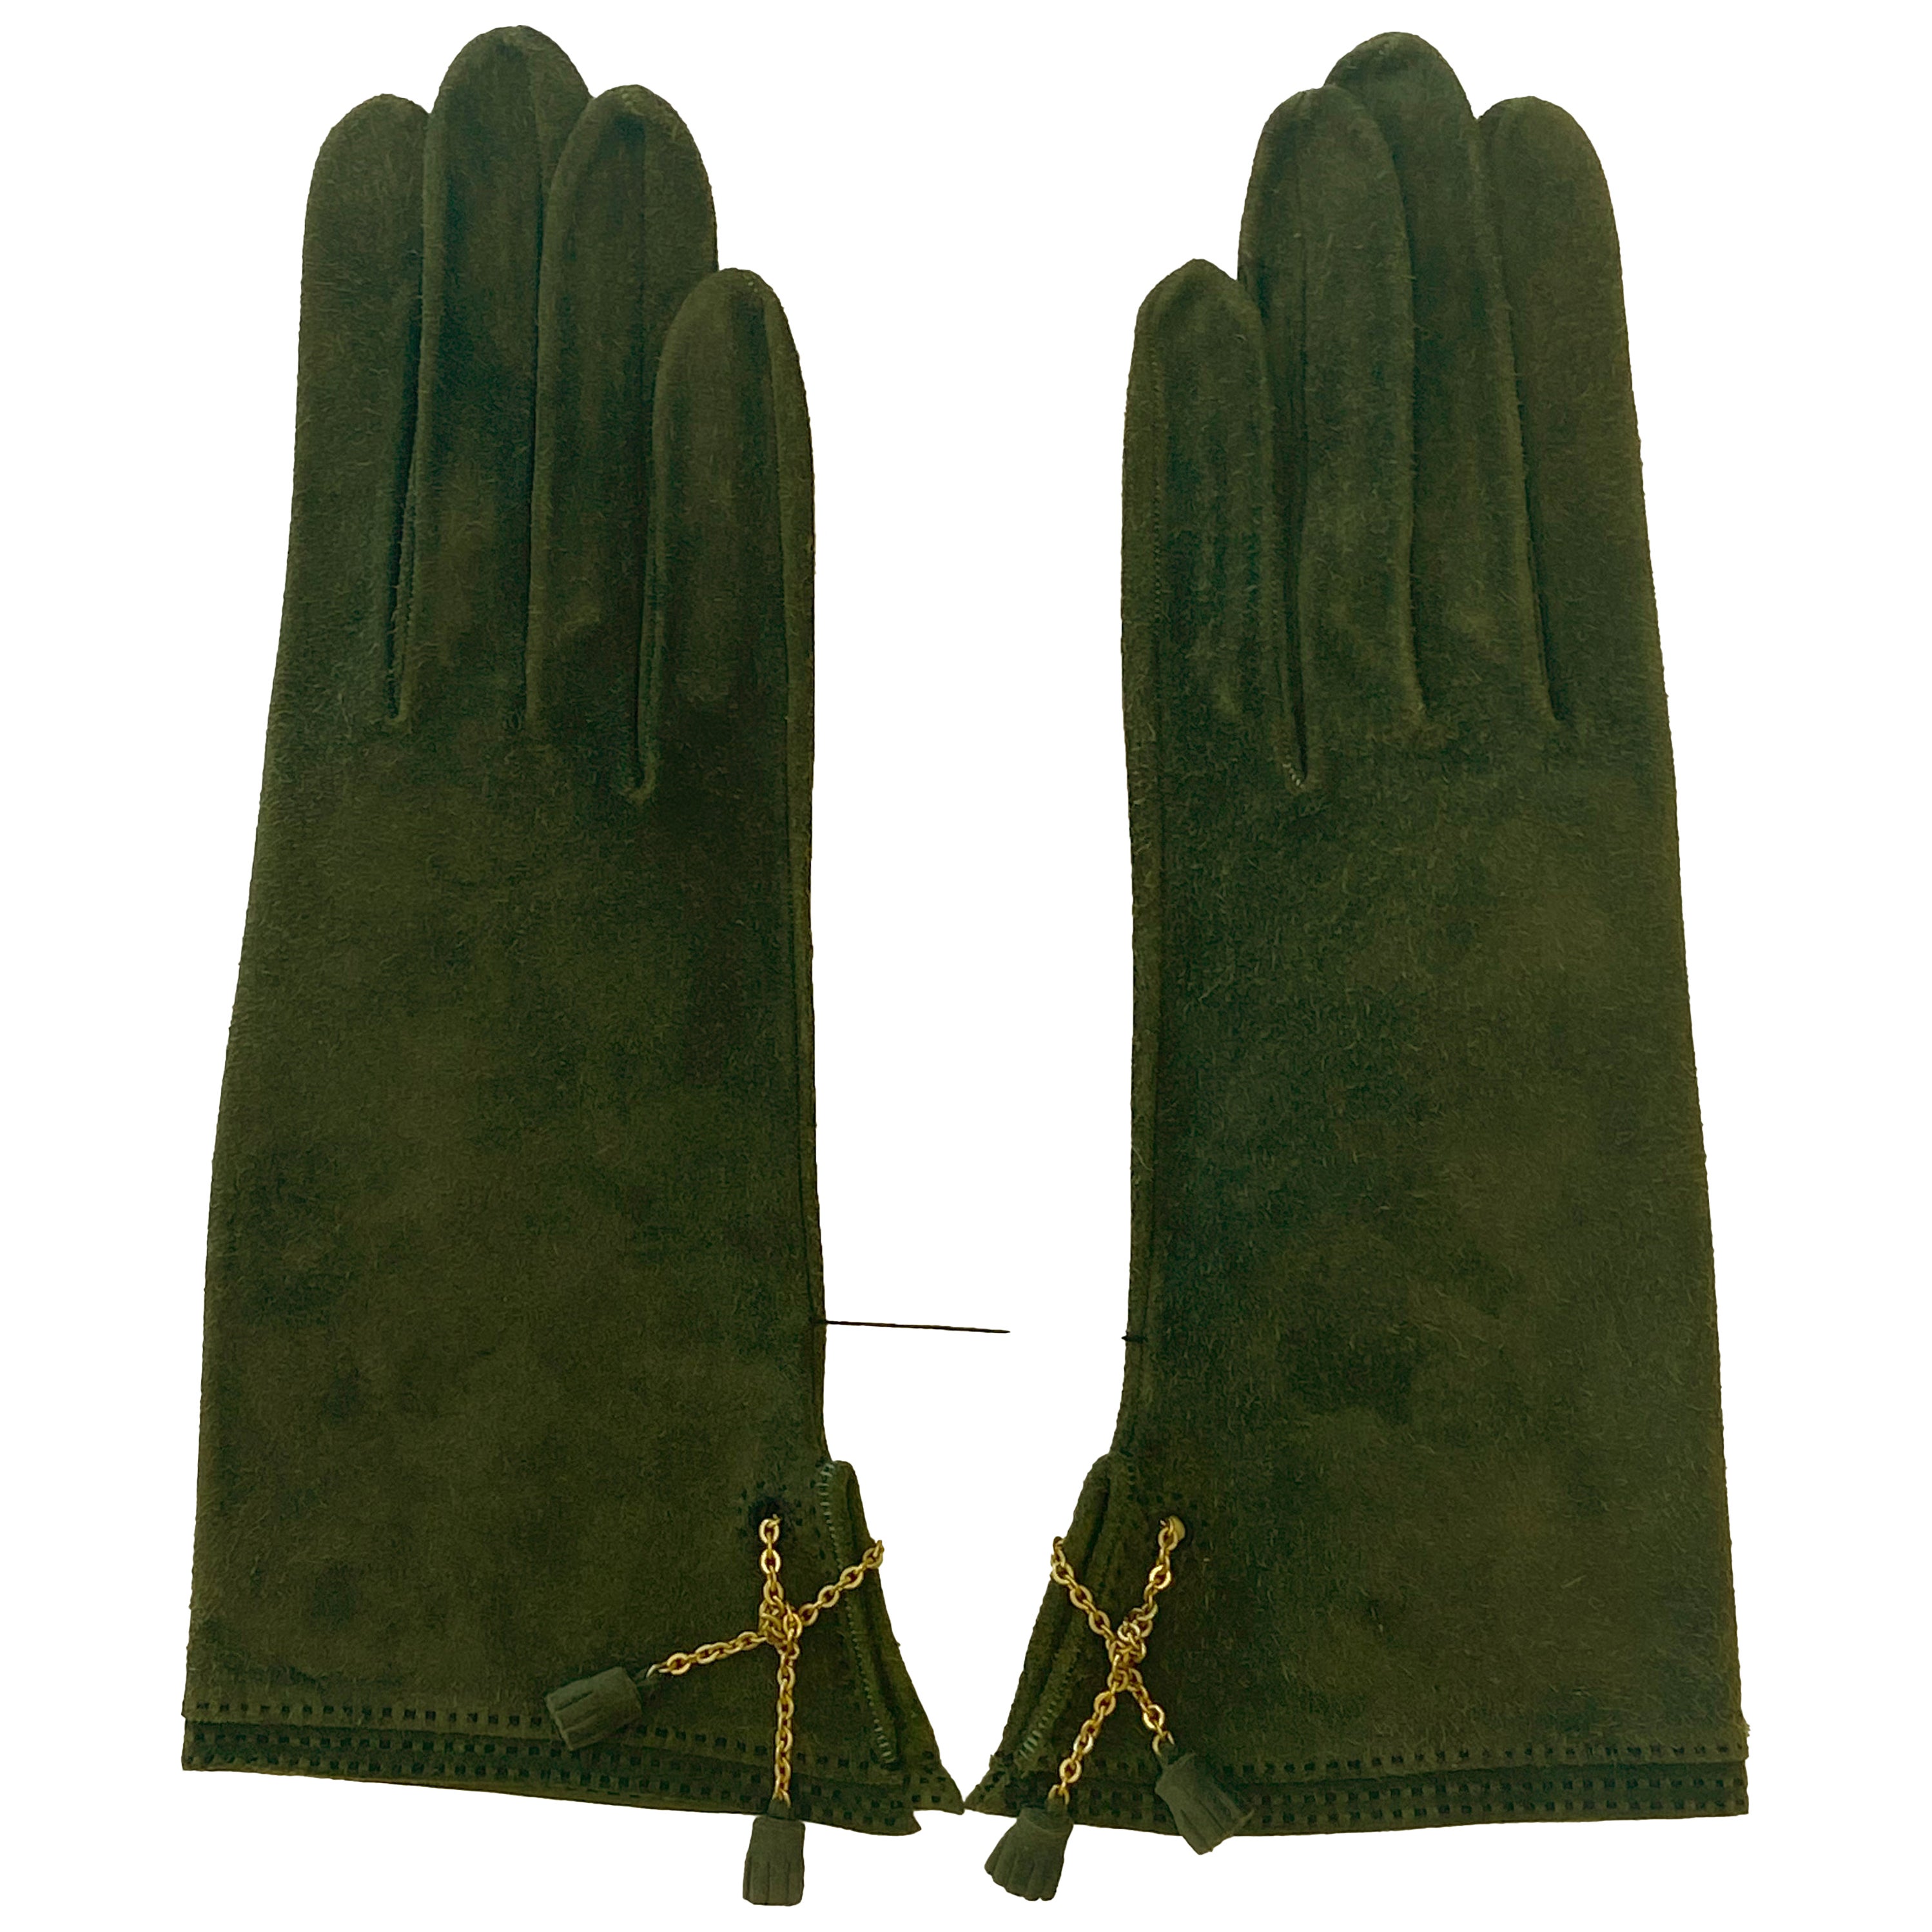 Hermes Forest Green Suede Gloves with Gold Chains & Tassels 7 1/2 Unworn